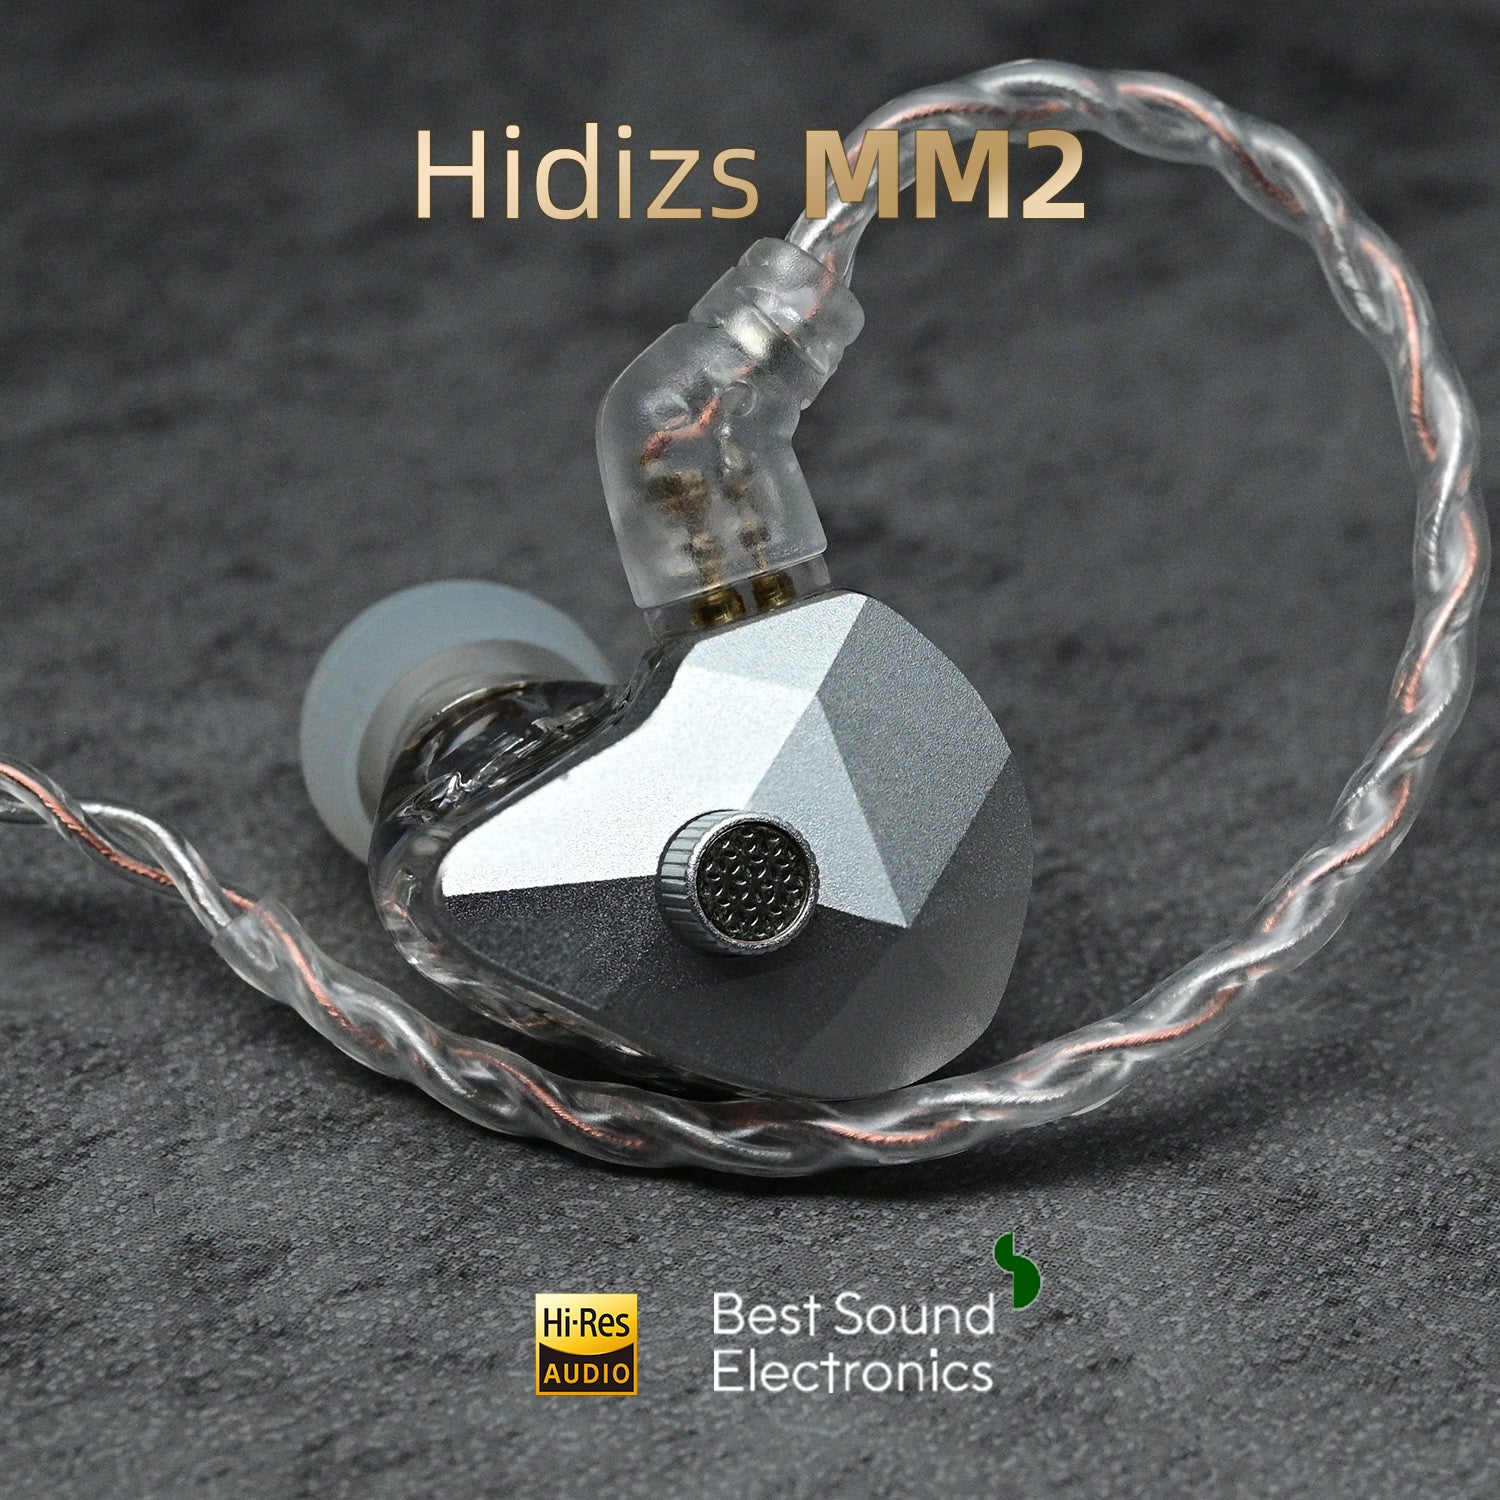 Hidizs MM2 English Review - Hi End Portable